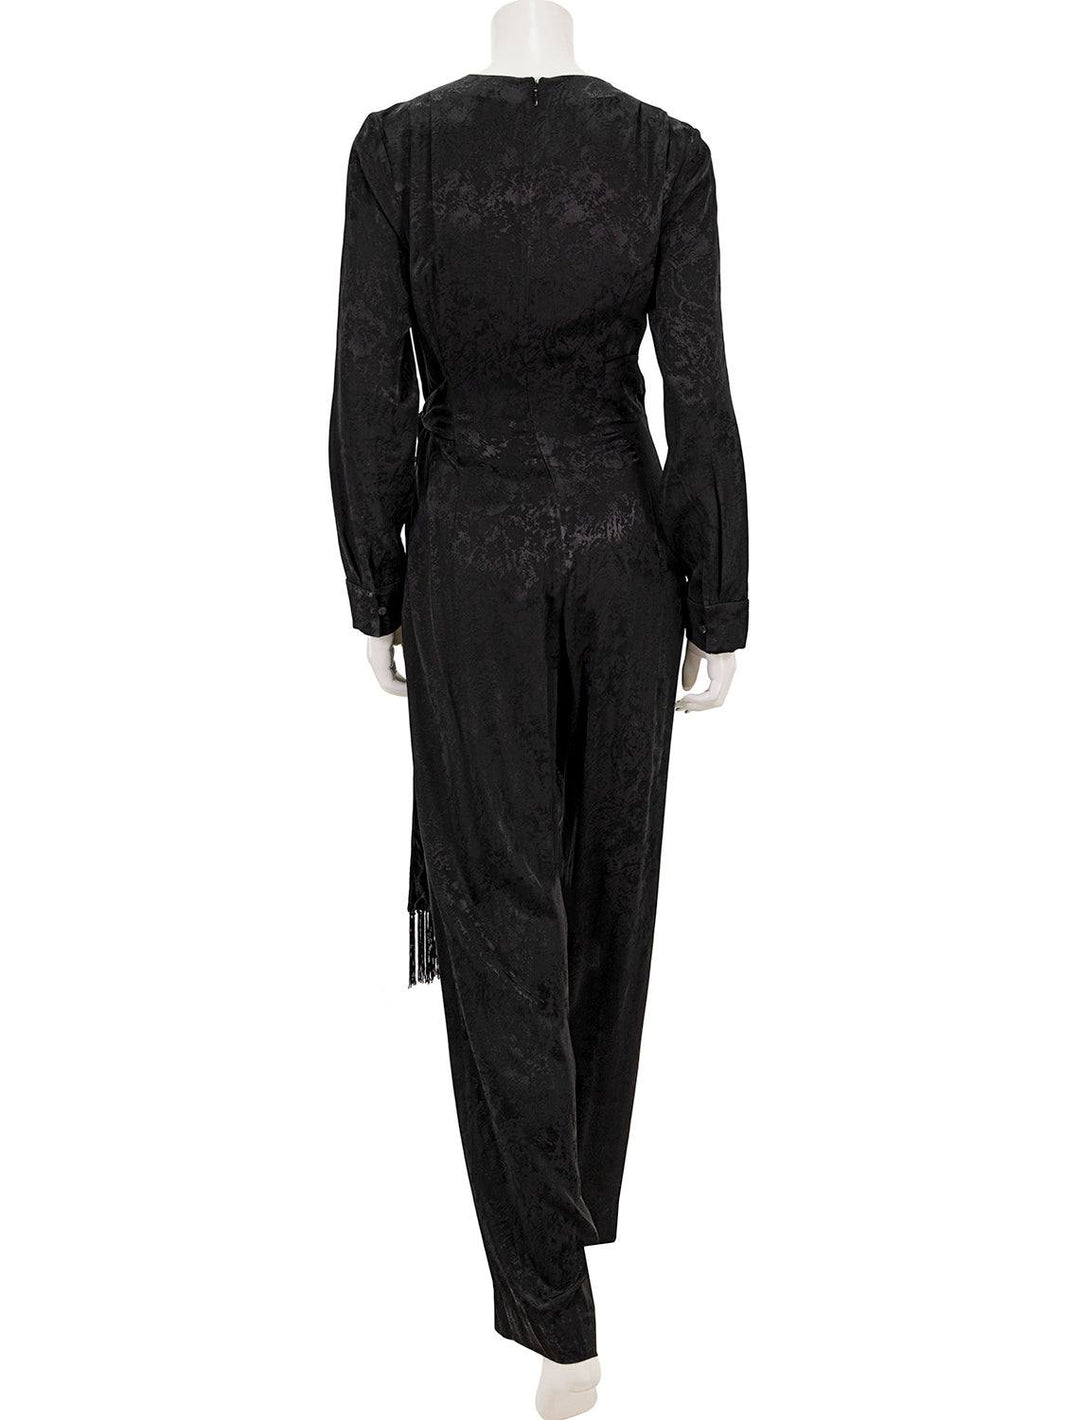 Back view of Jonathan Simkhai's julia jacquard wrapped jumpsuit in black.